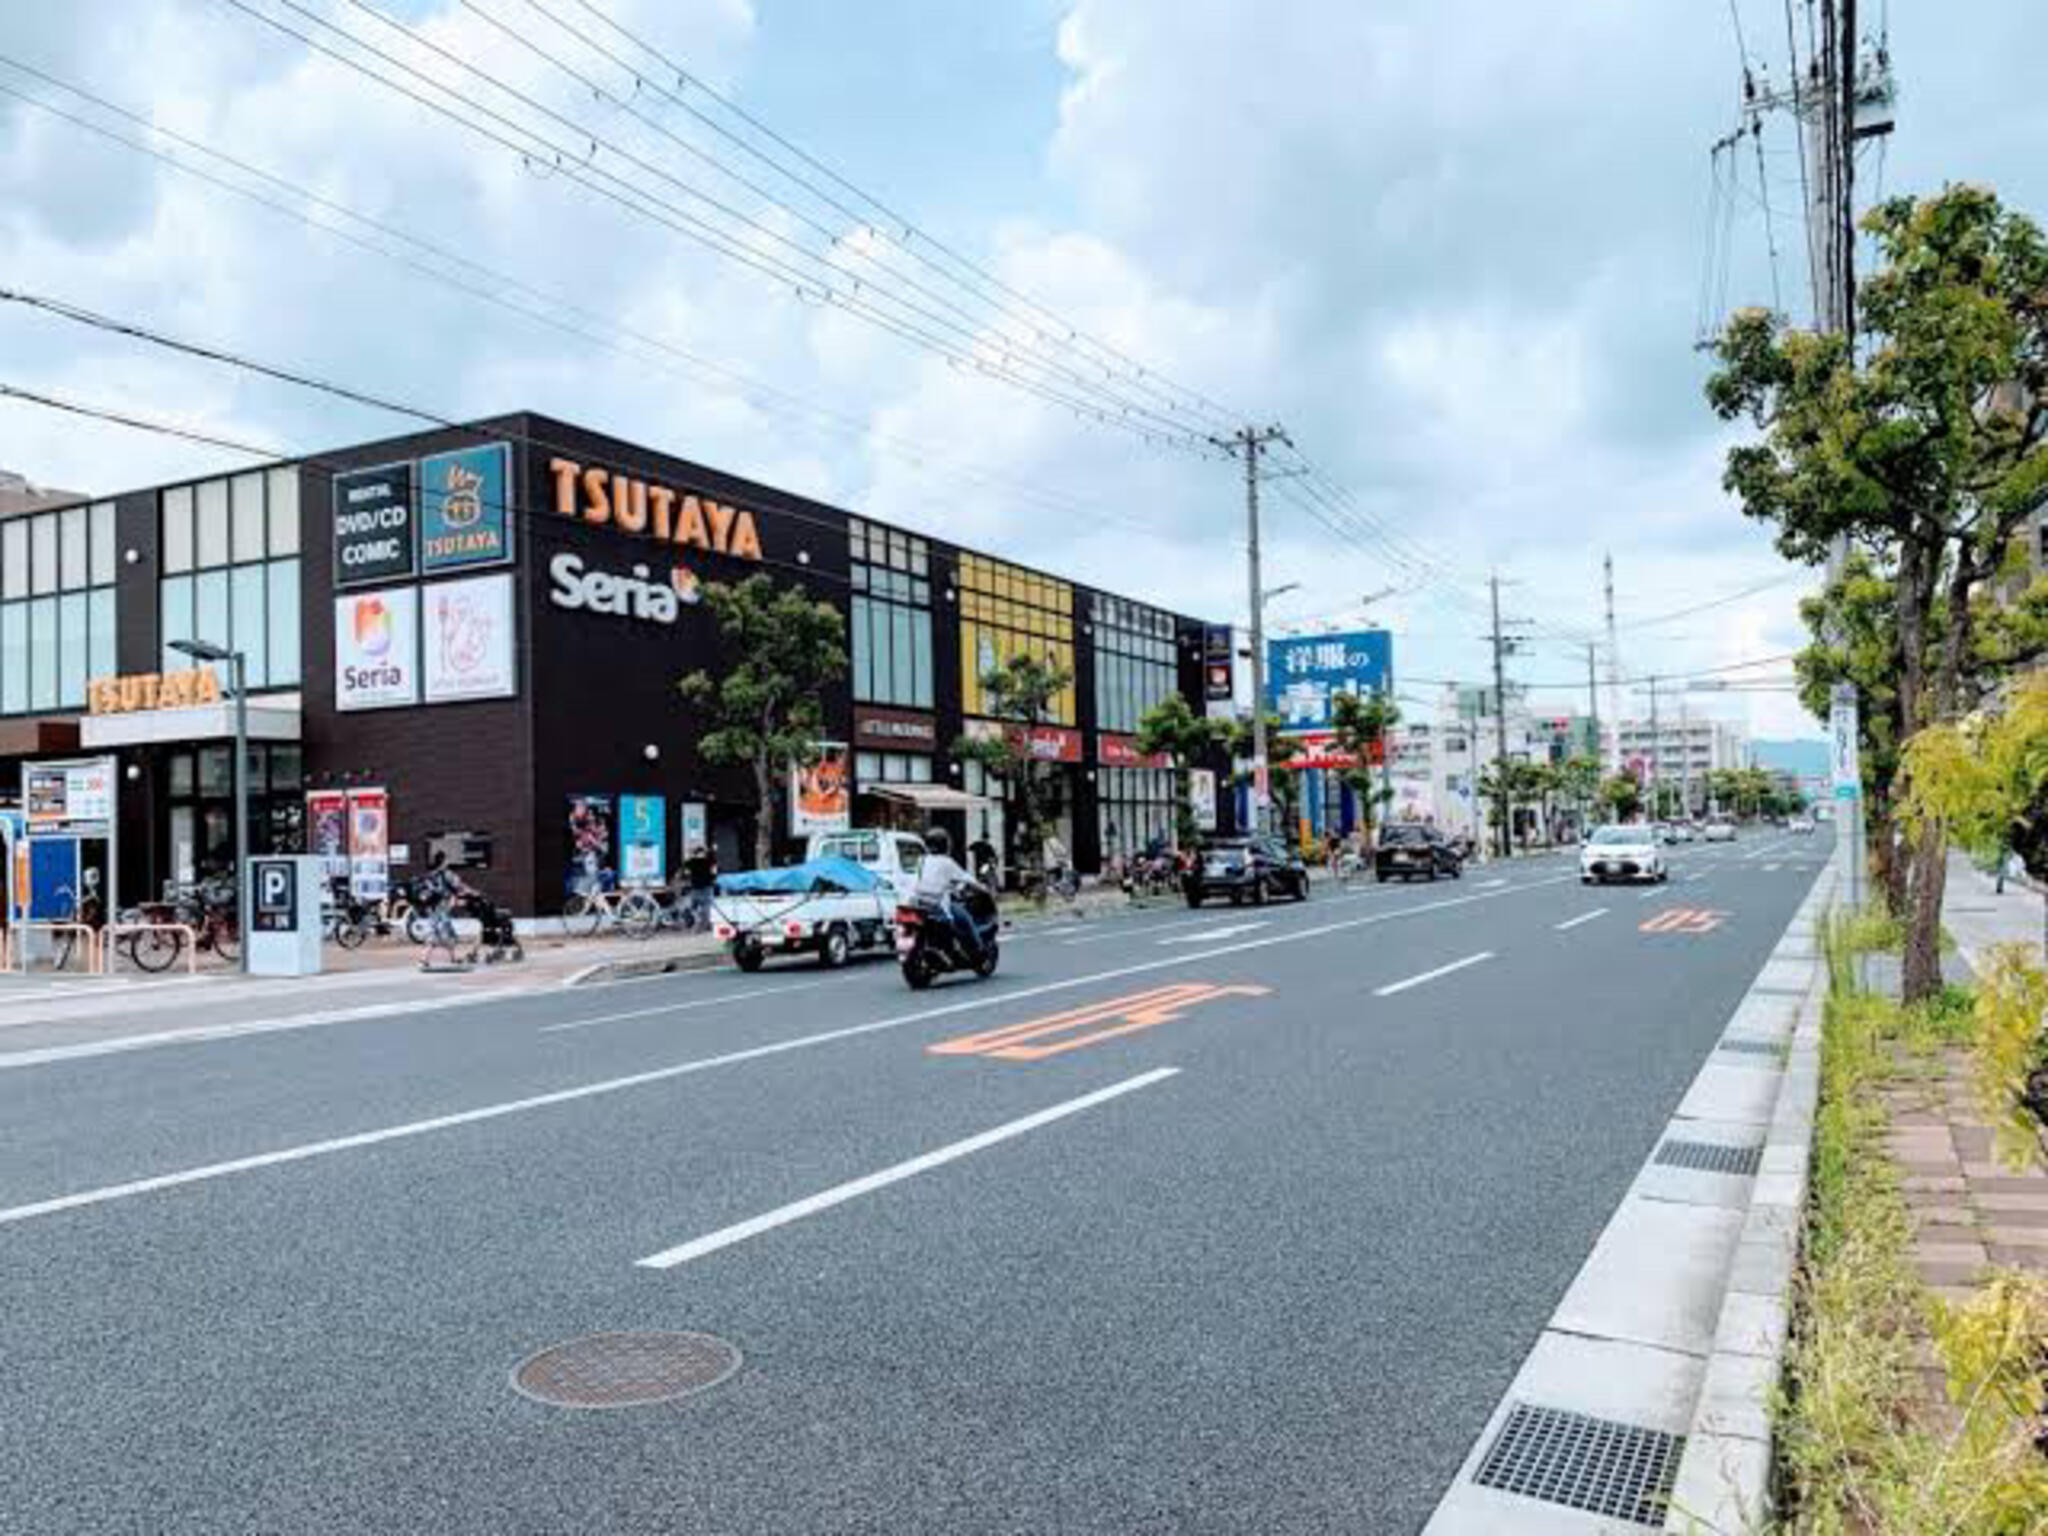 TSUTAYA 西宮薬師町店の代表写真3